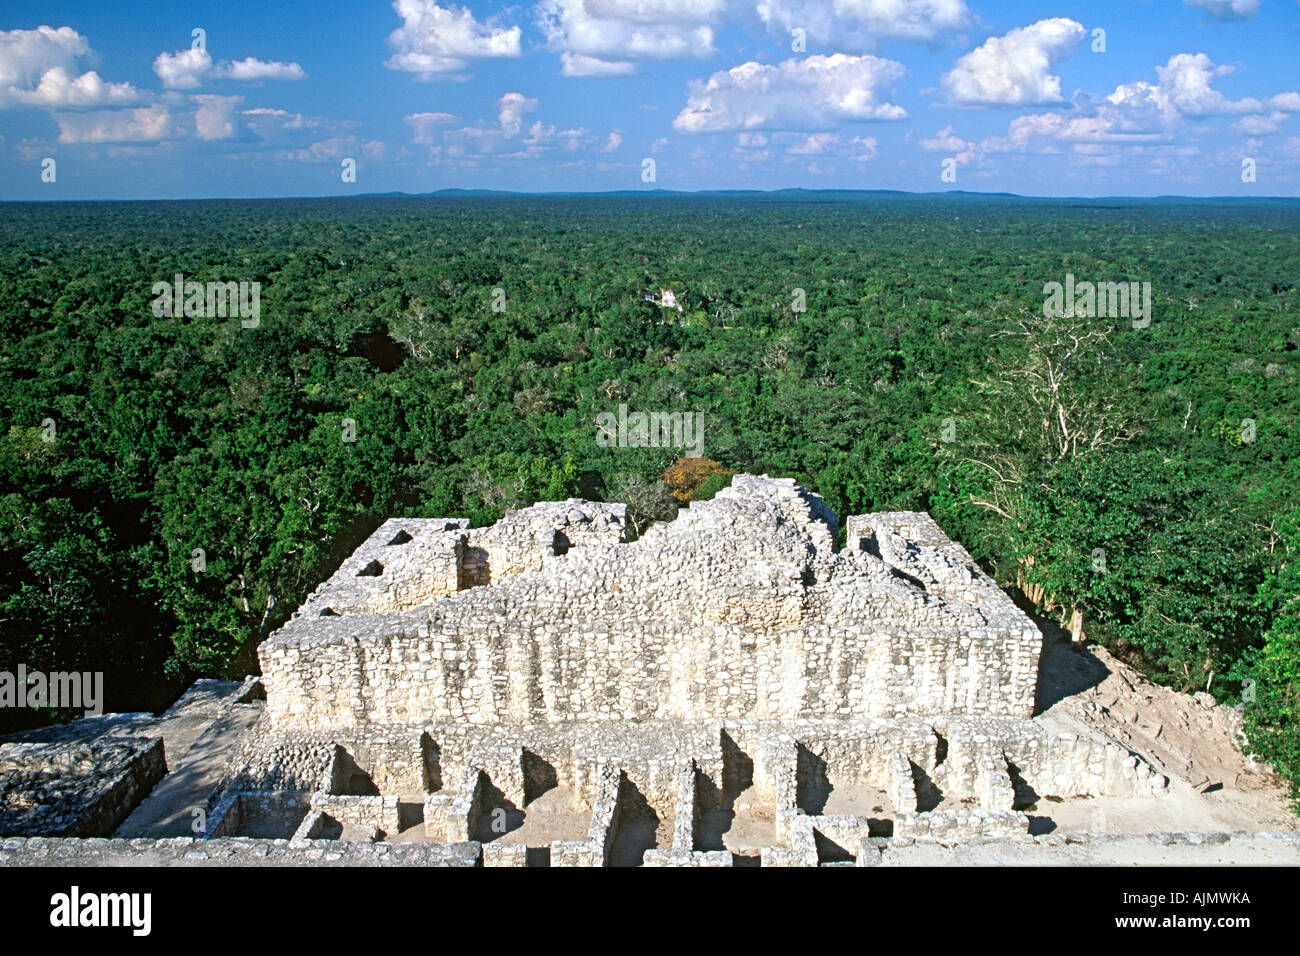 Blick über die Tierras Bajas Regenwald vom oberen Rand der Calakmul Maya Ruinen in Campeche Staat im Süden Mexikos. Stockfoto